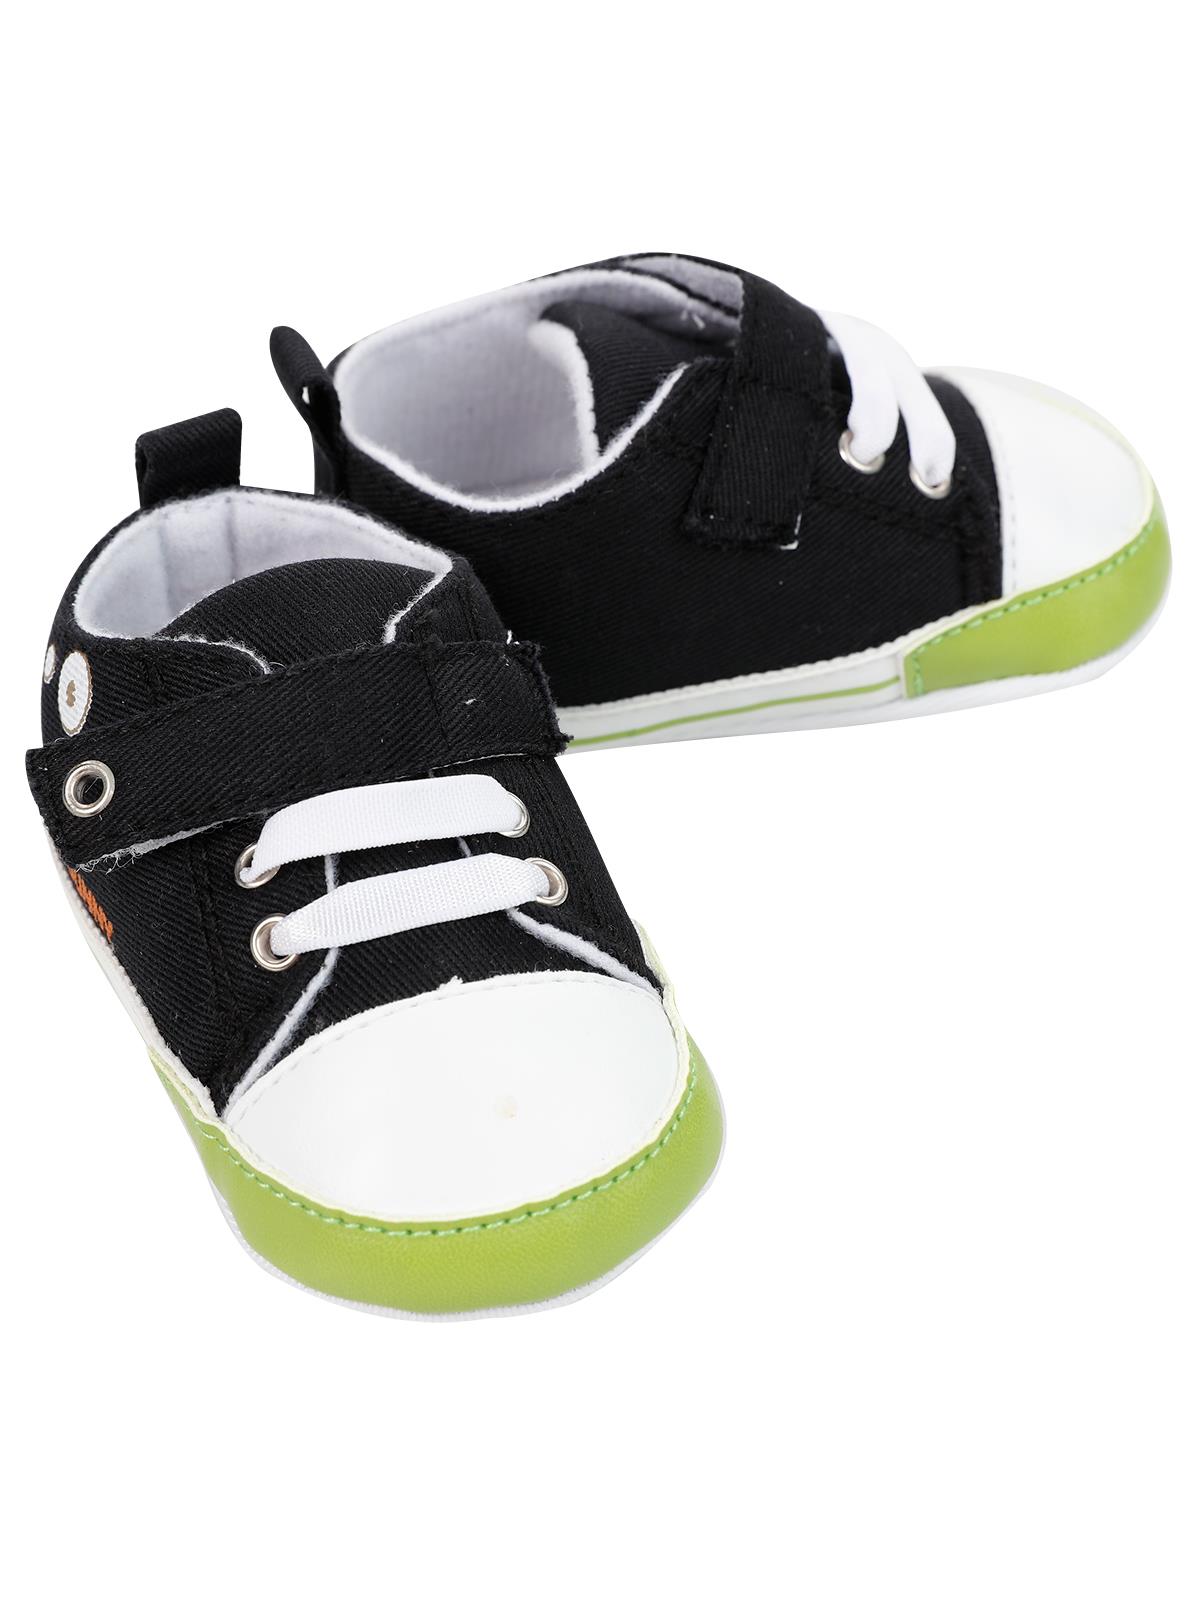 Civil Baby Erkek Bebek Patik Ayakkabı 18-20 Numara Siyah